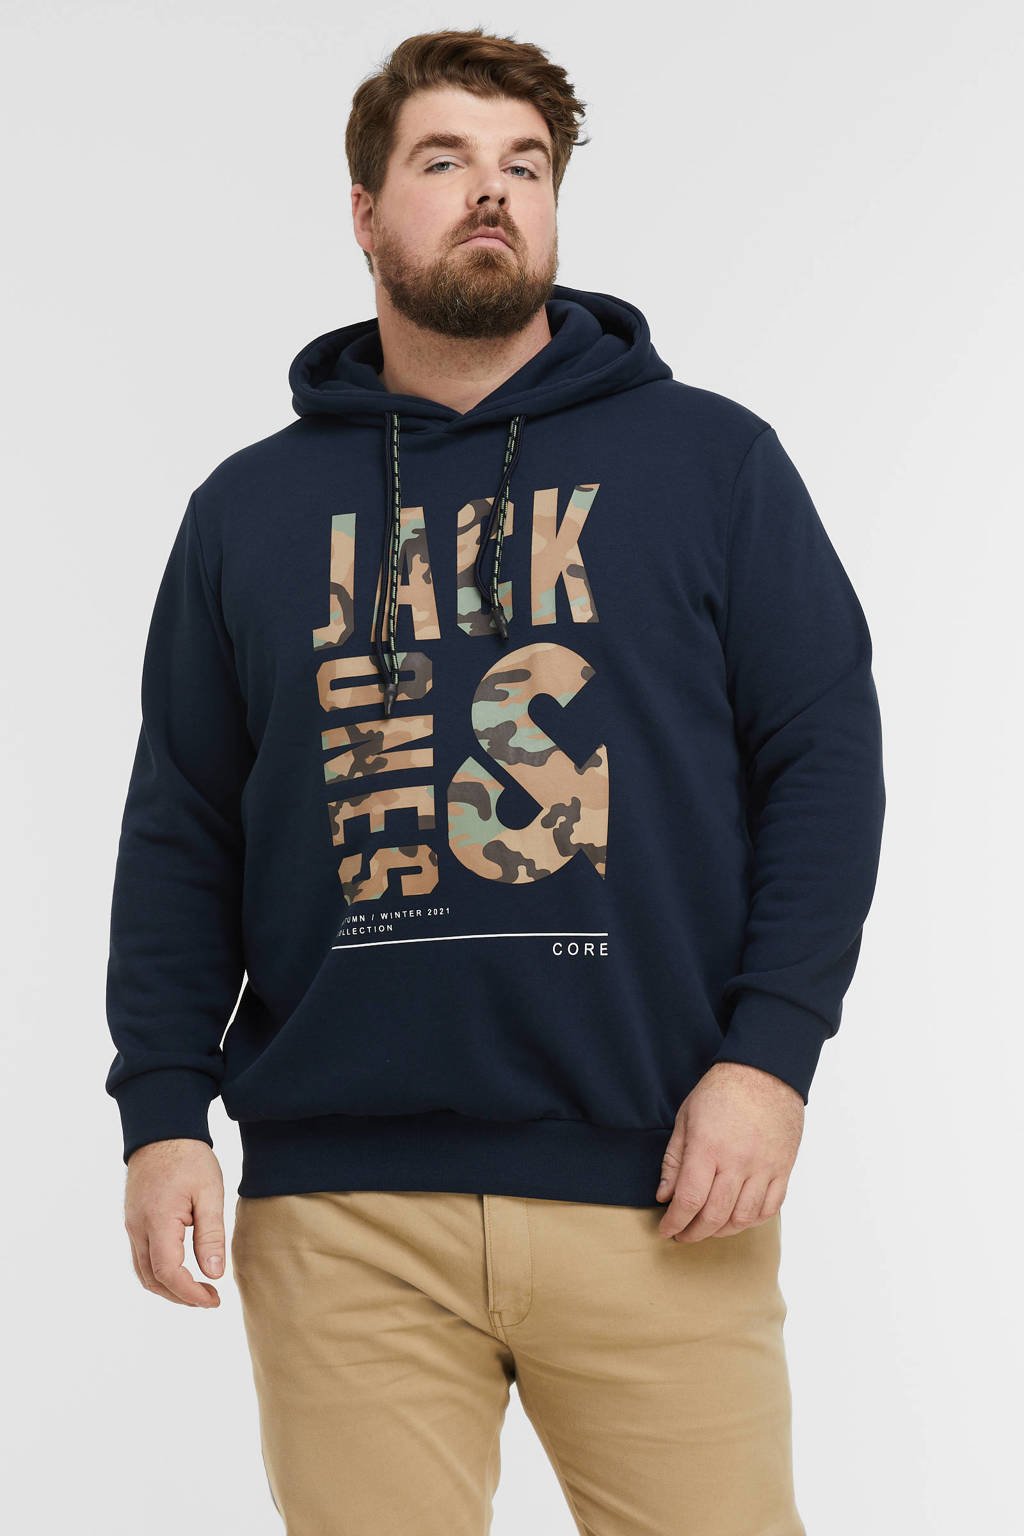 JACK & JONES PLUS SIZE hoodie Plus Size met printopdruk navy blazer, Navy Blazer